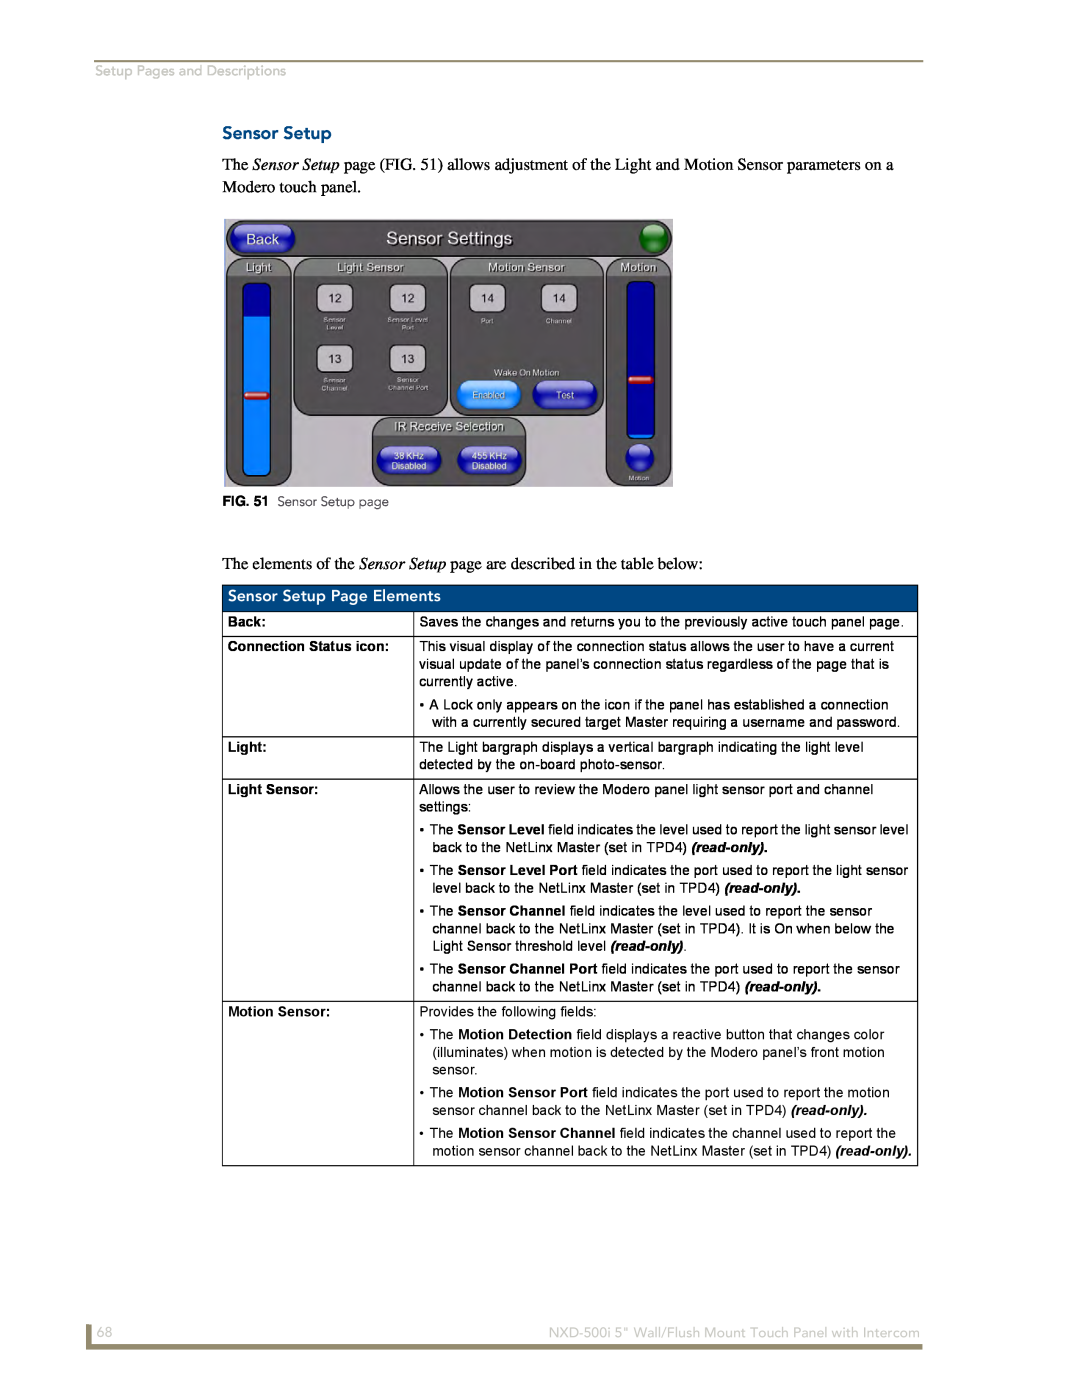 AMX NXD-500i manual Sensor Setup Page Elements, Setup Pages and Descriptions 